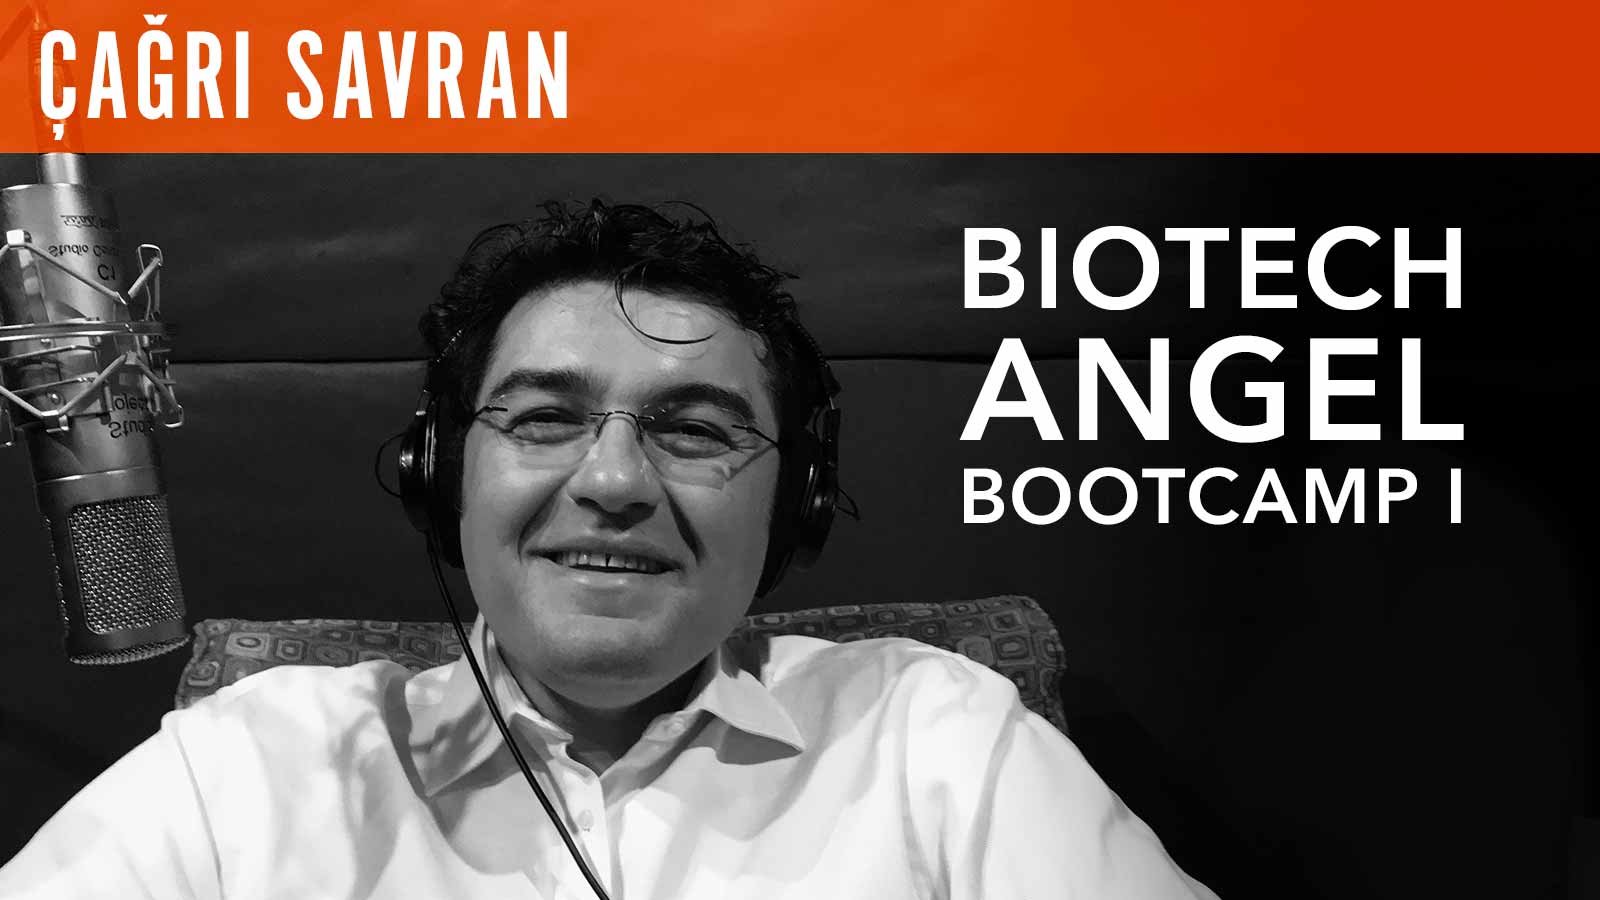 Cagri Savran, "Biotech Angel Bootcamp I"